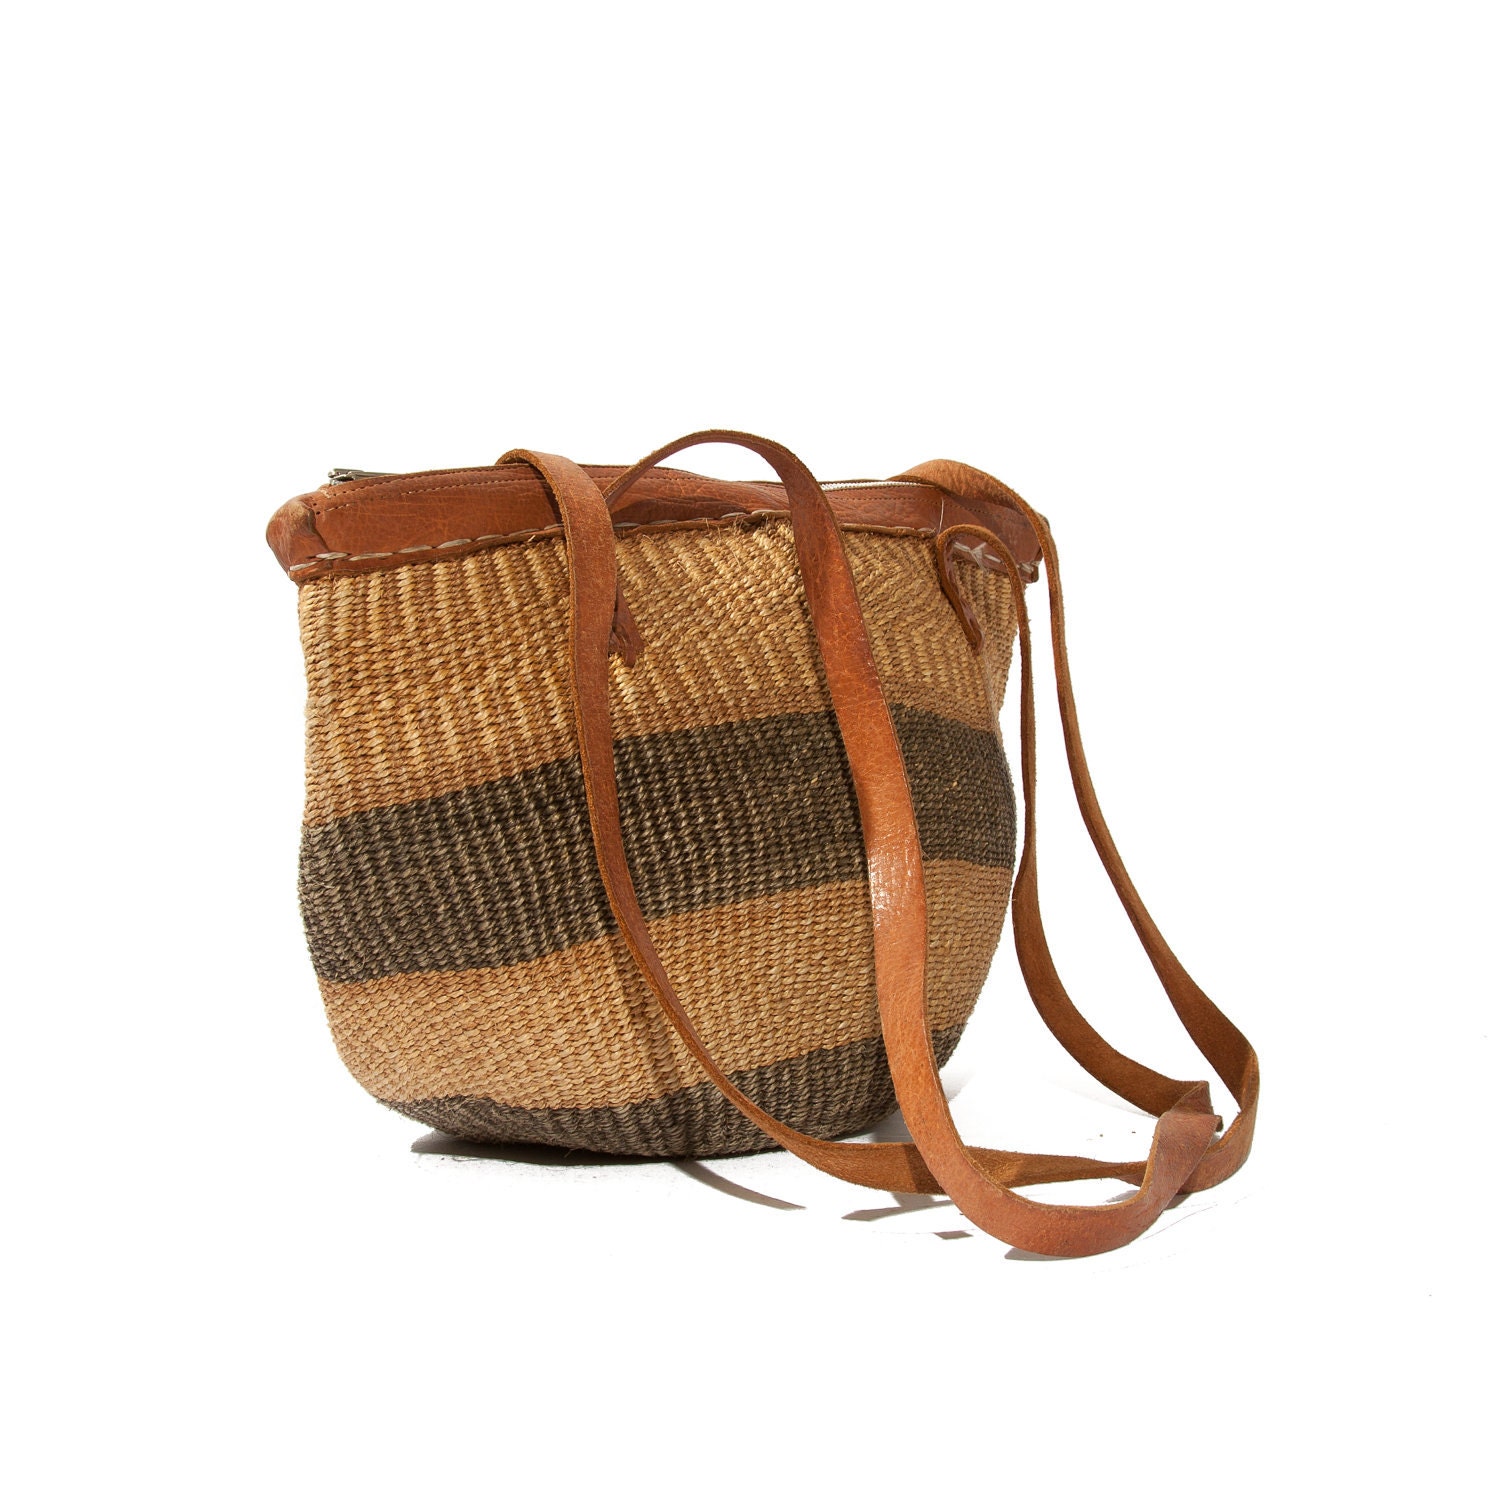 Vintage Woven Straw Market Tote Sisal Bag Brown Leather Trim